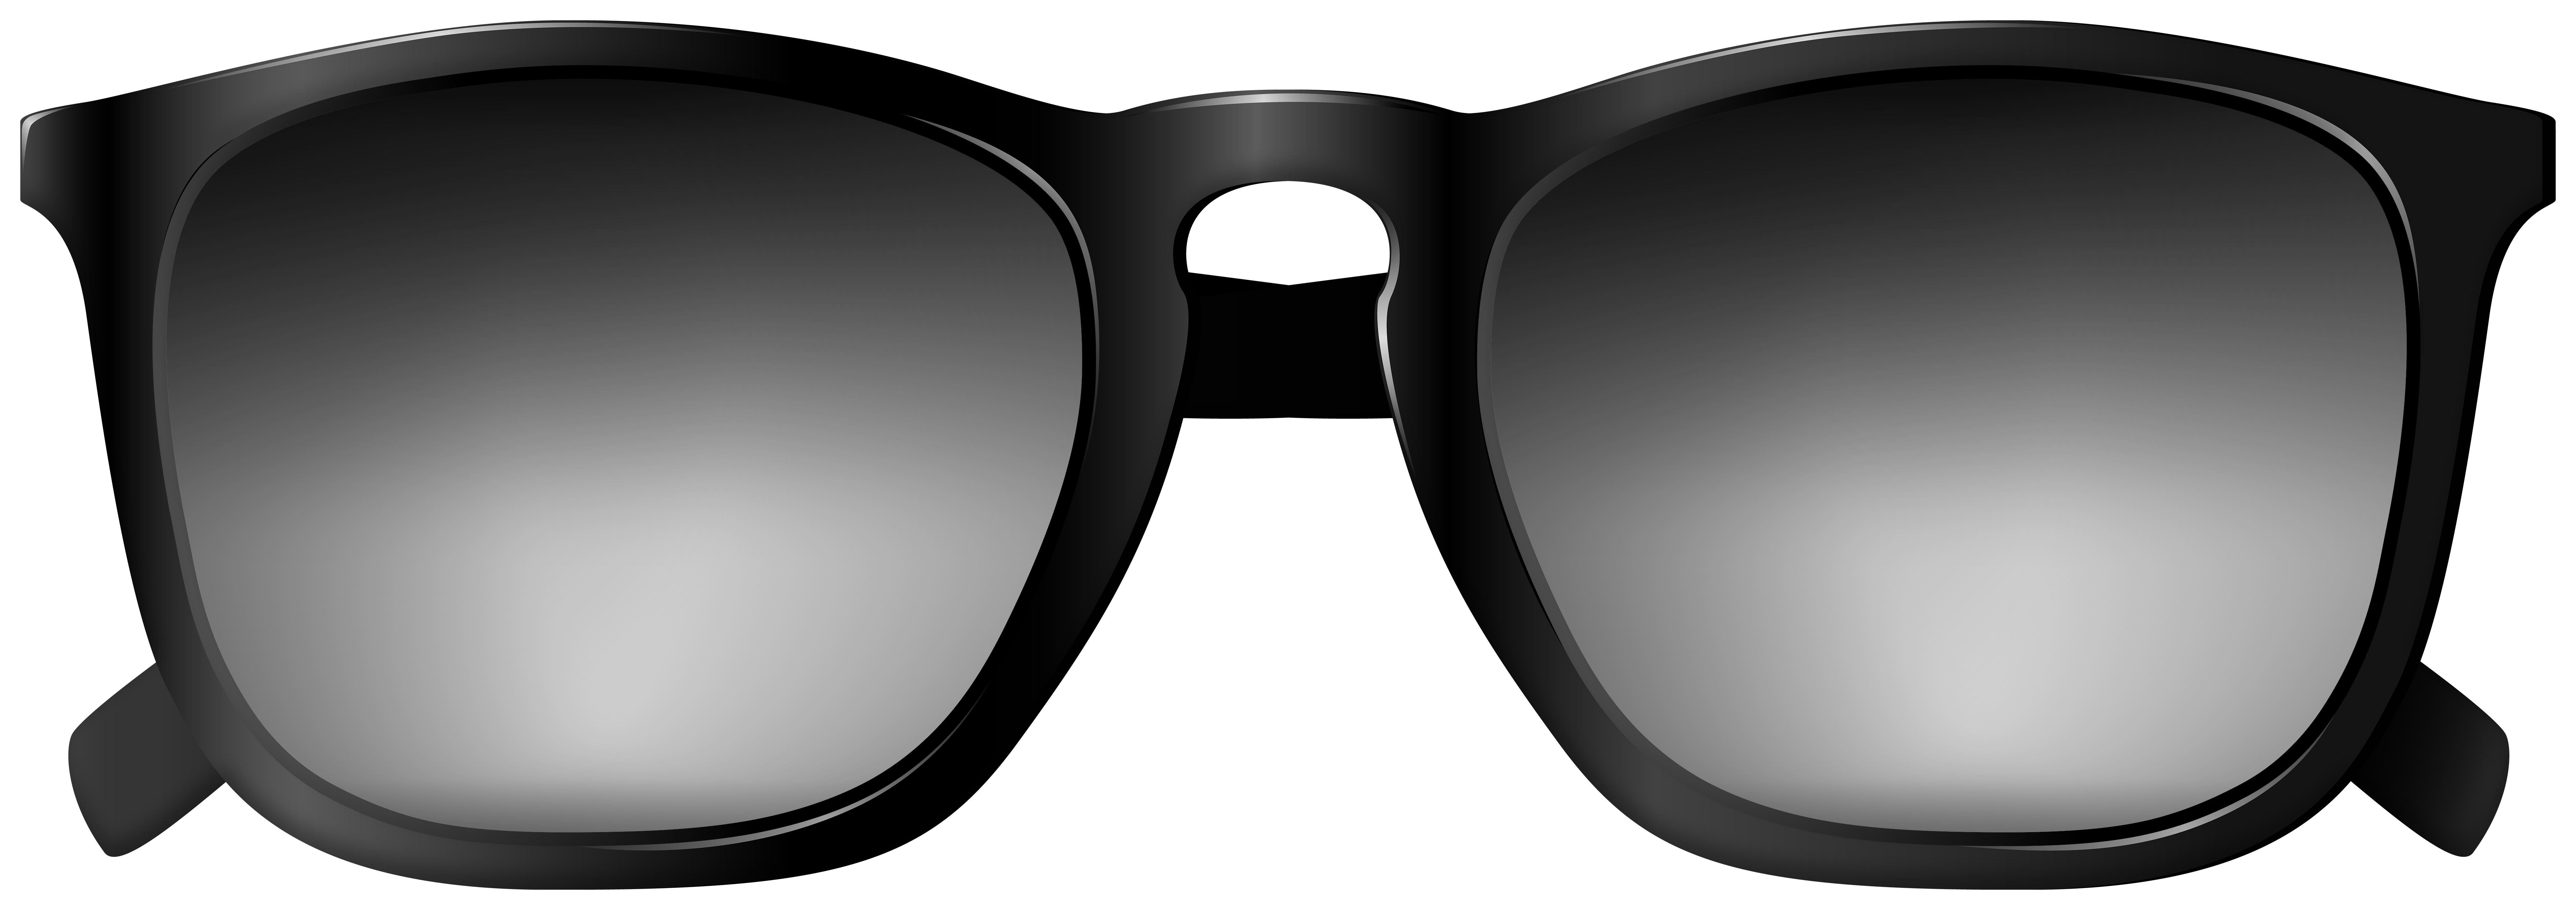 Download Sunglasses Black Transparent Image | Gallery Yopriceville ...